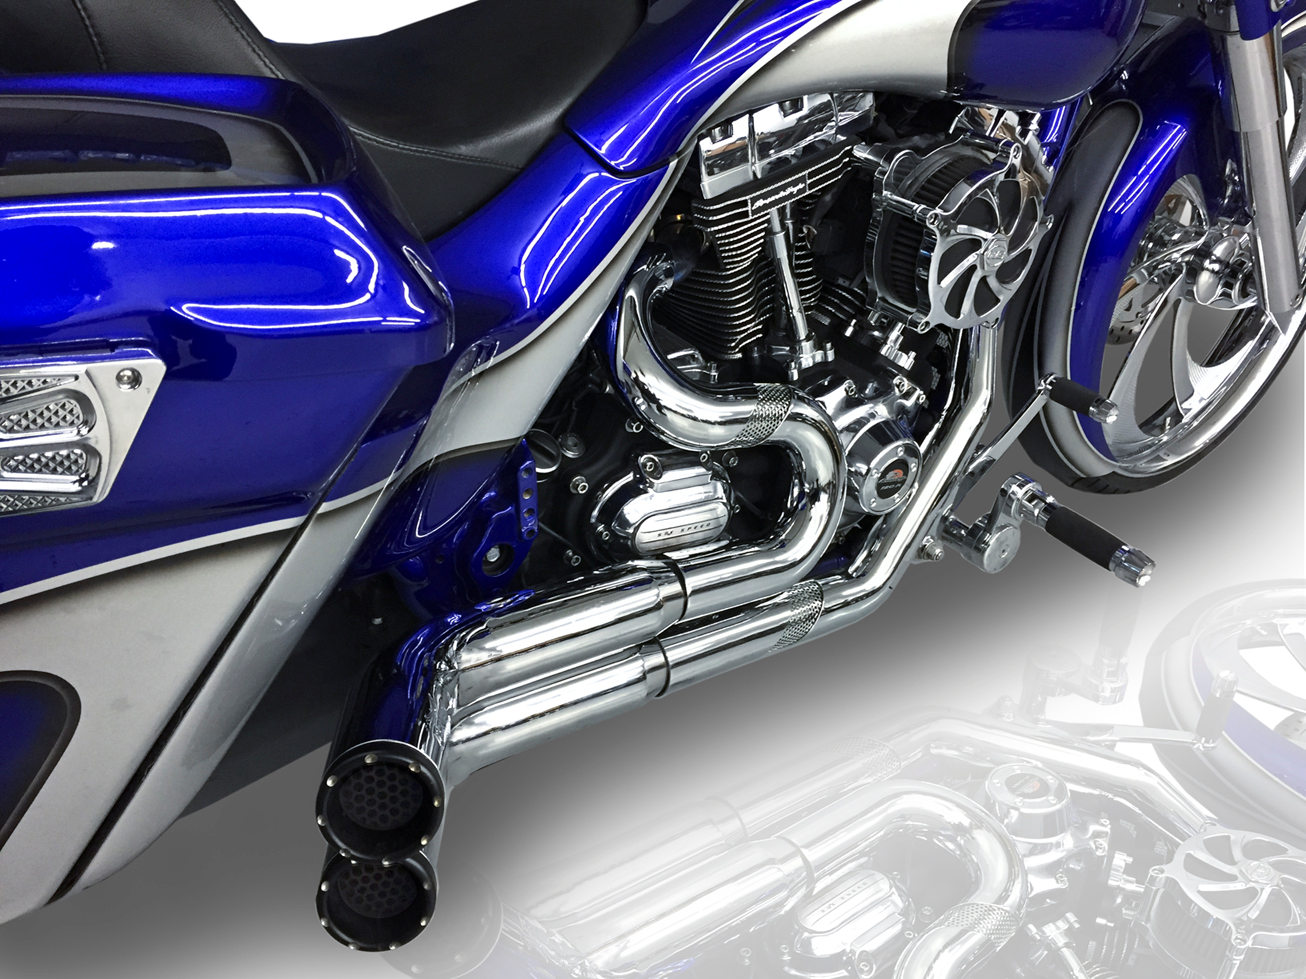 "Side dump" Exhaust options - Harley Davidson Forums